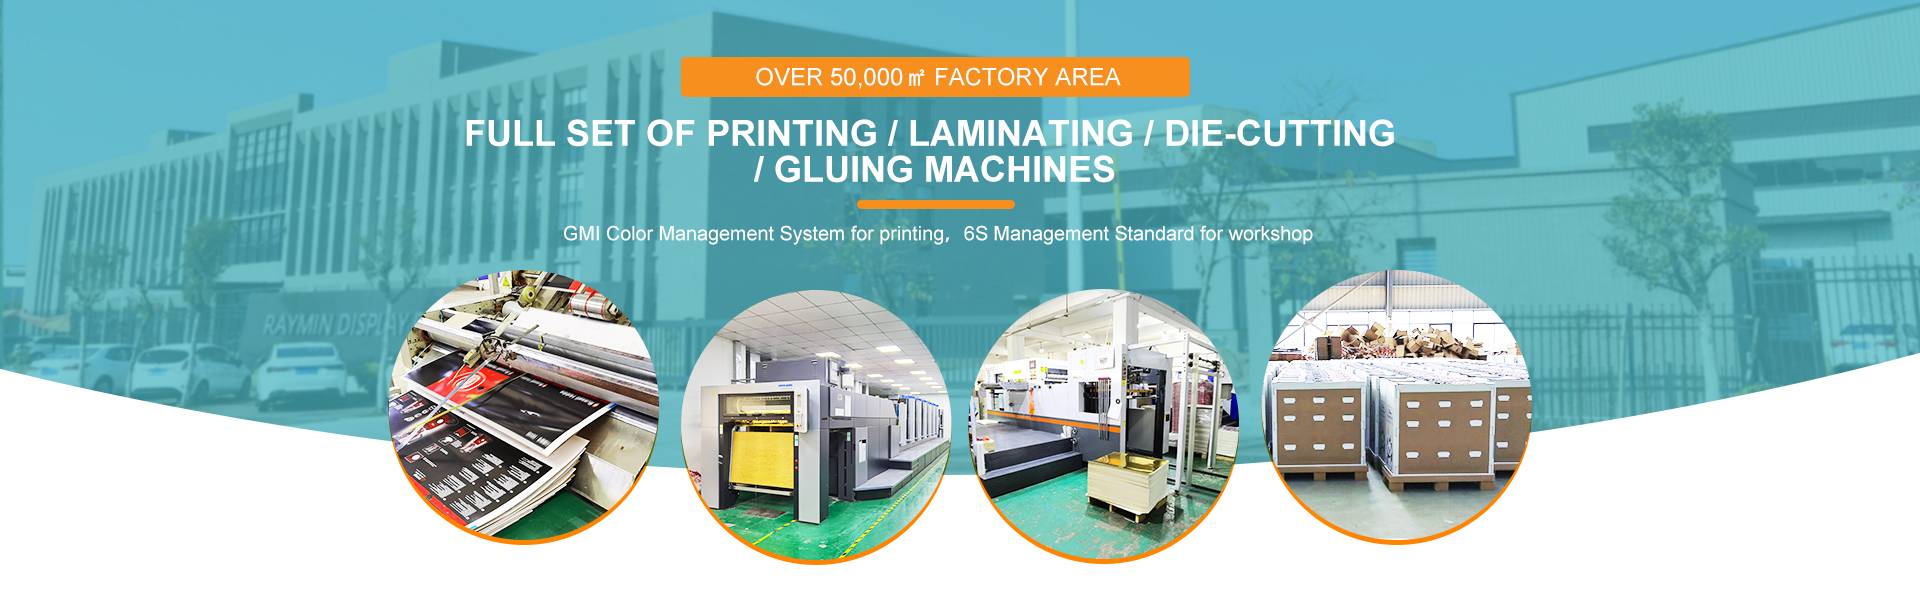 Фабрика за печатење